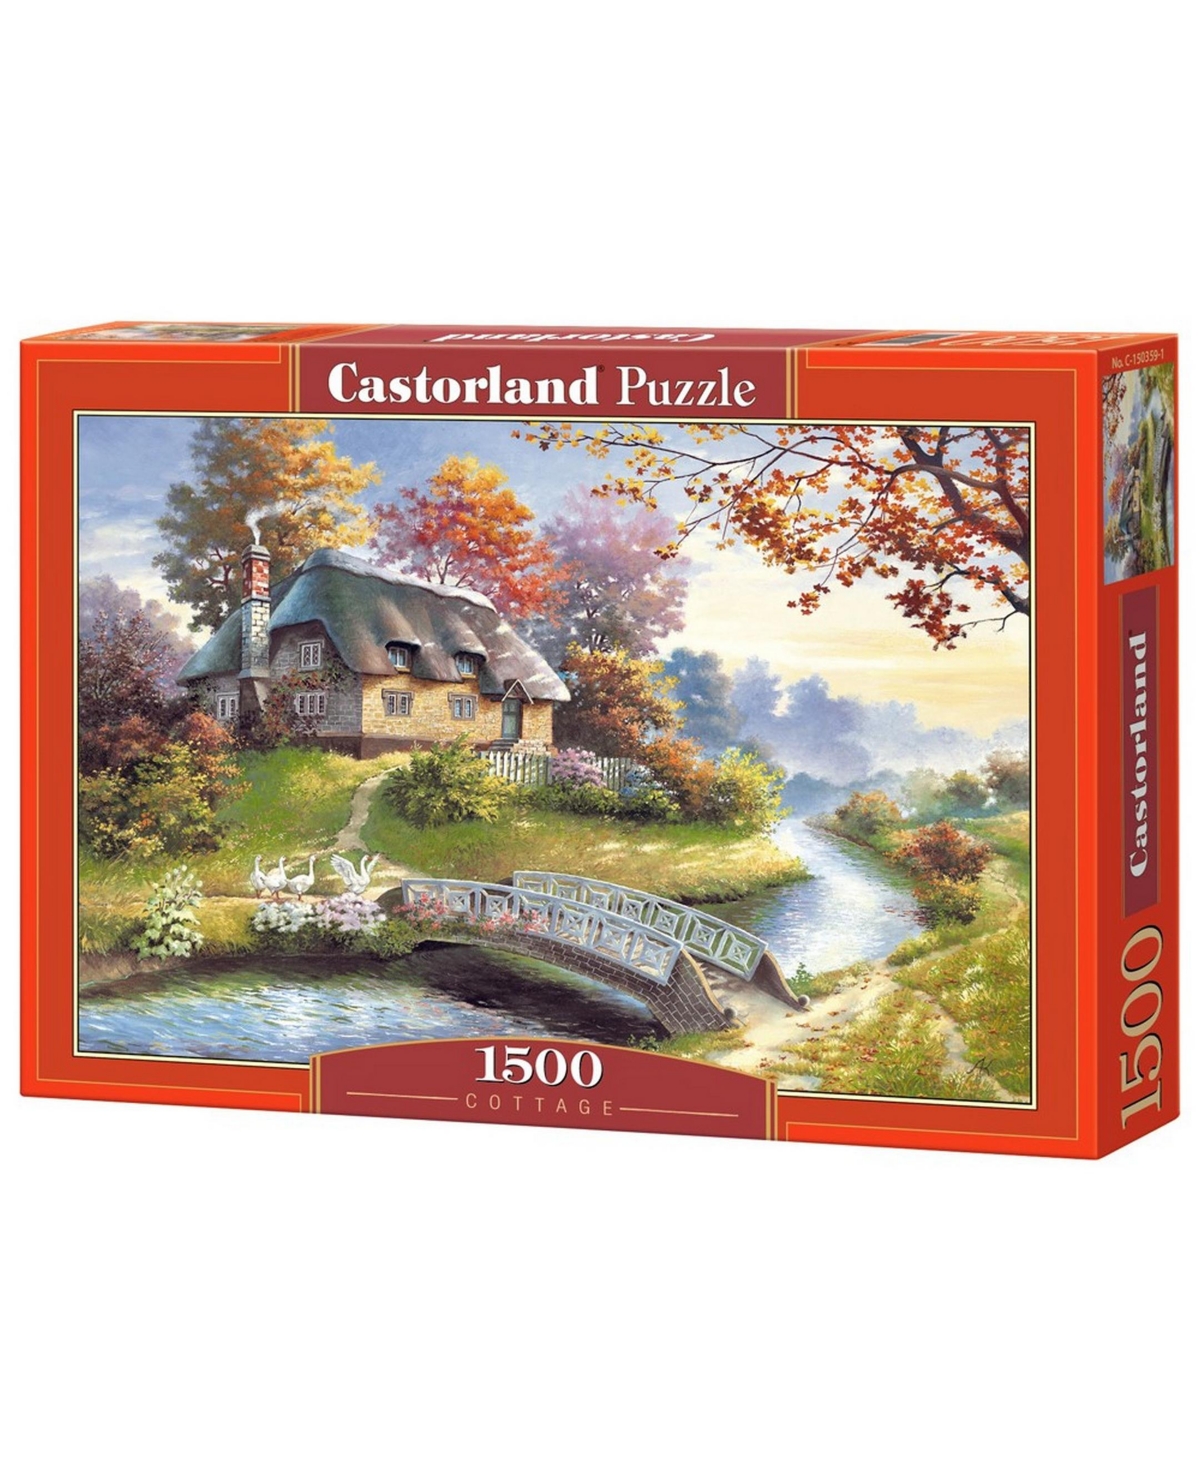 Castorland Cottage Jigsaw Puzzle Set, 1500 Piece In Multicolor